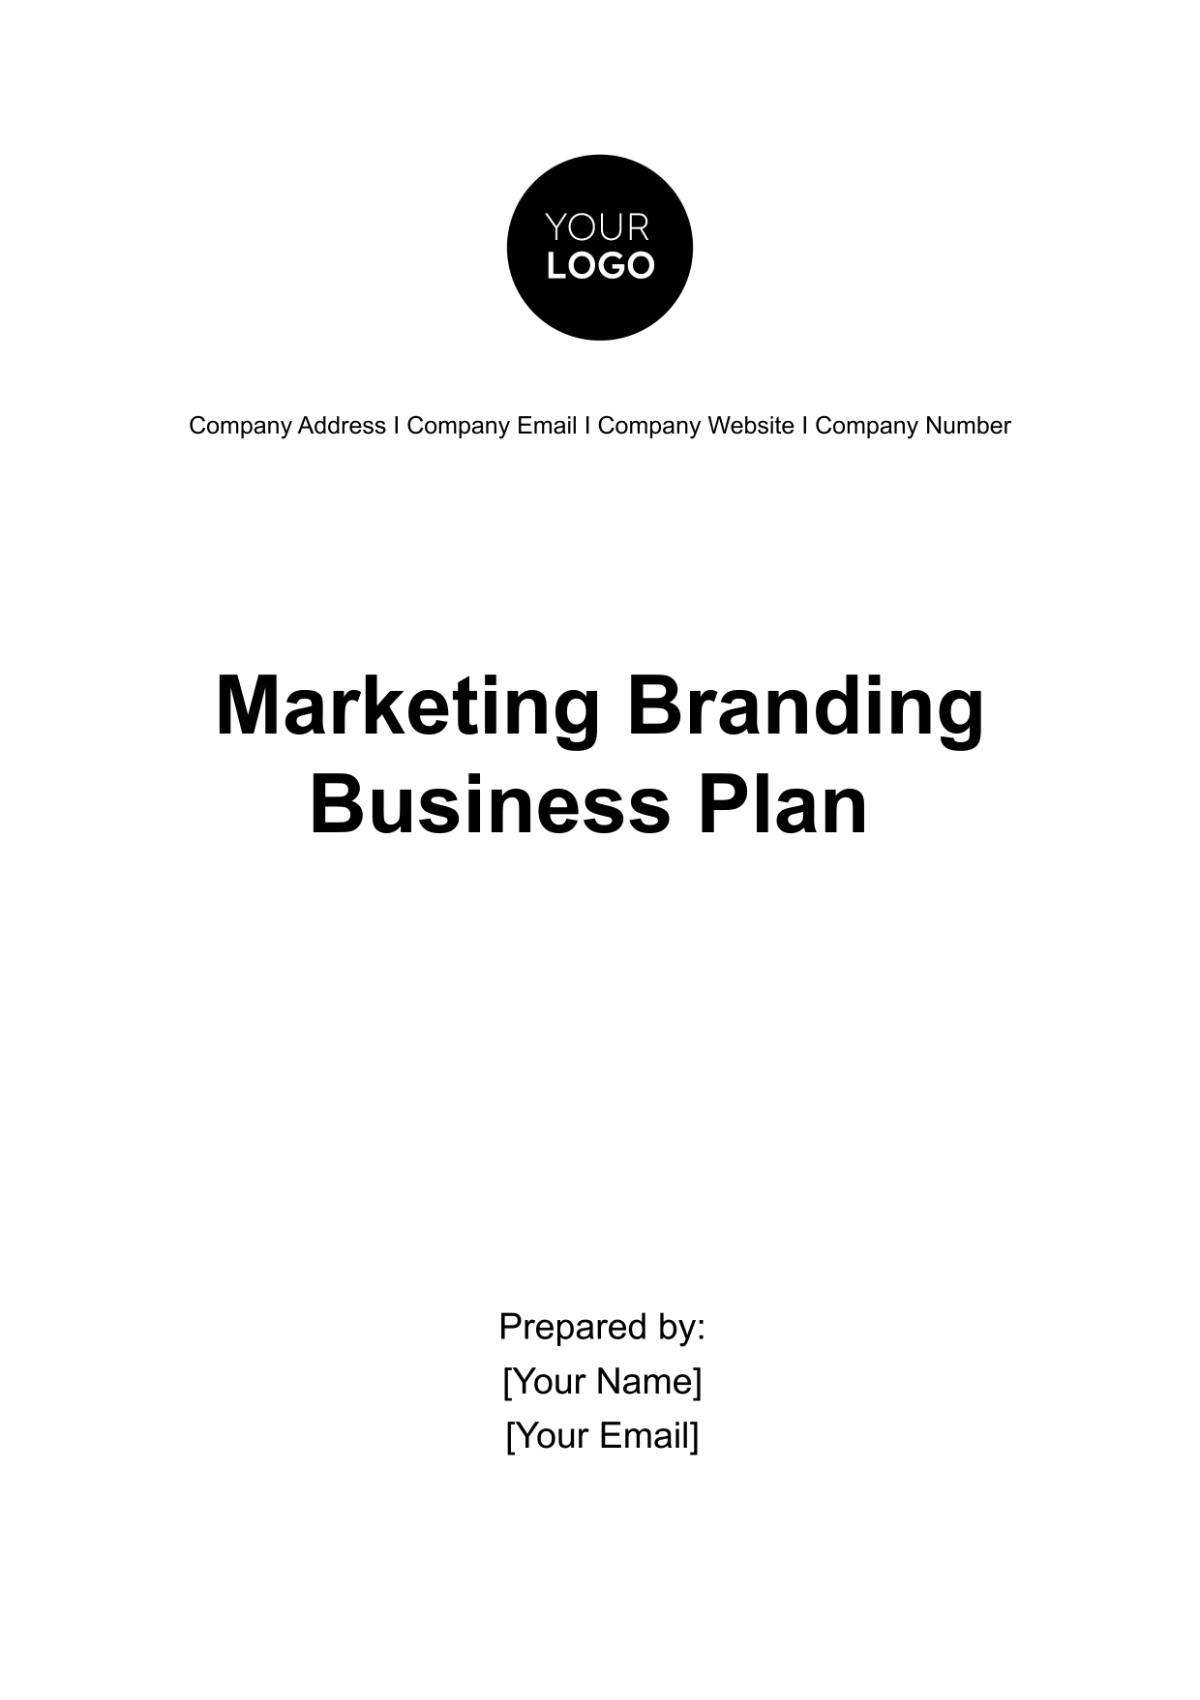 Free Marketing Branding Business Plan Template